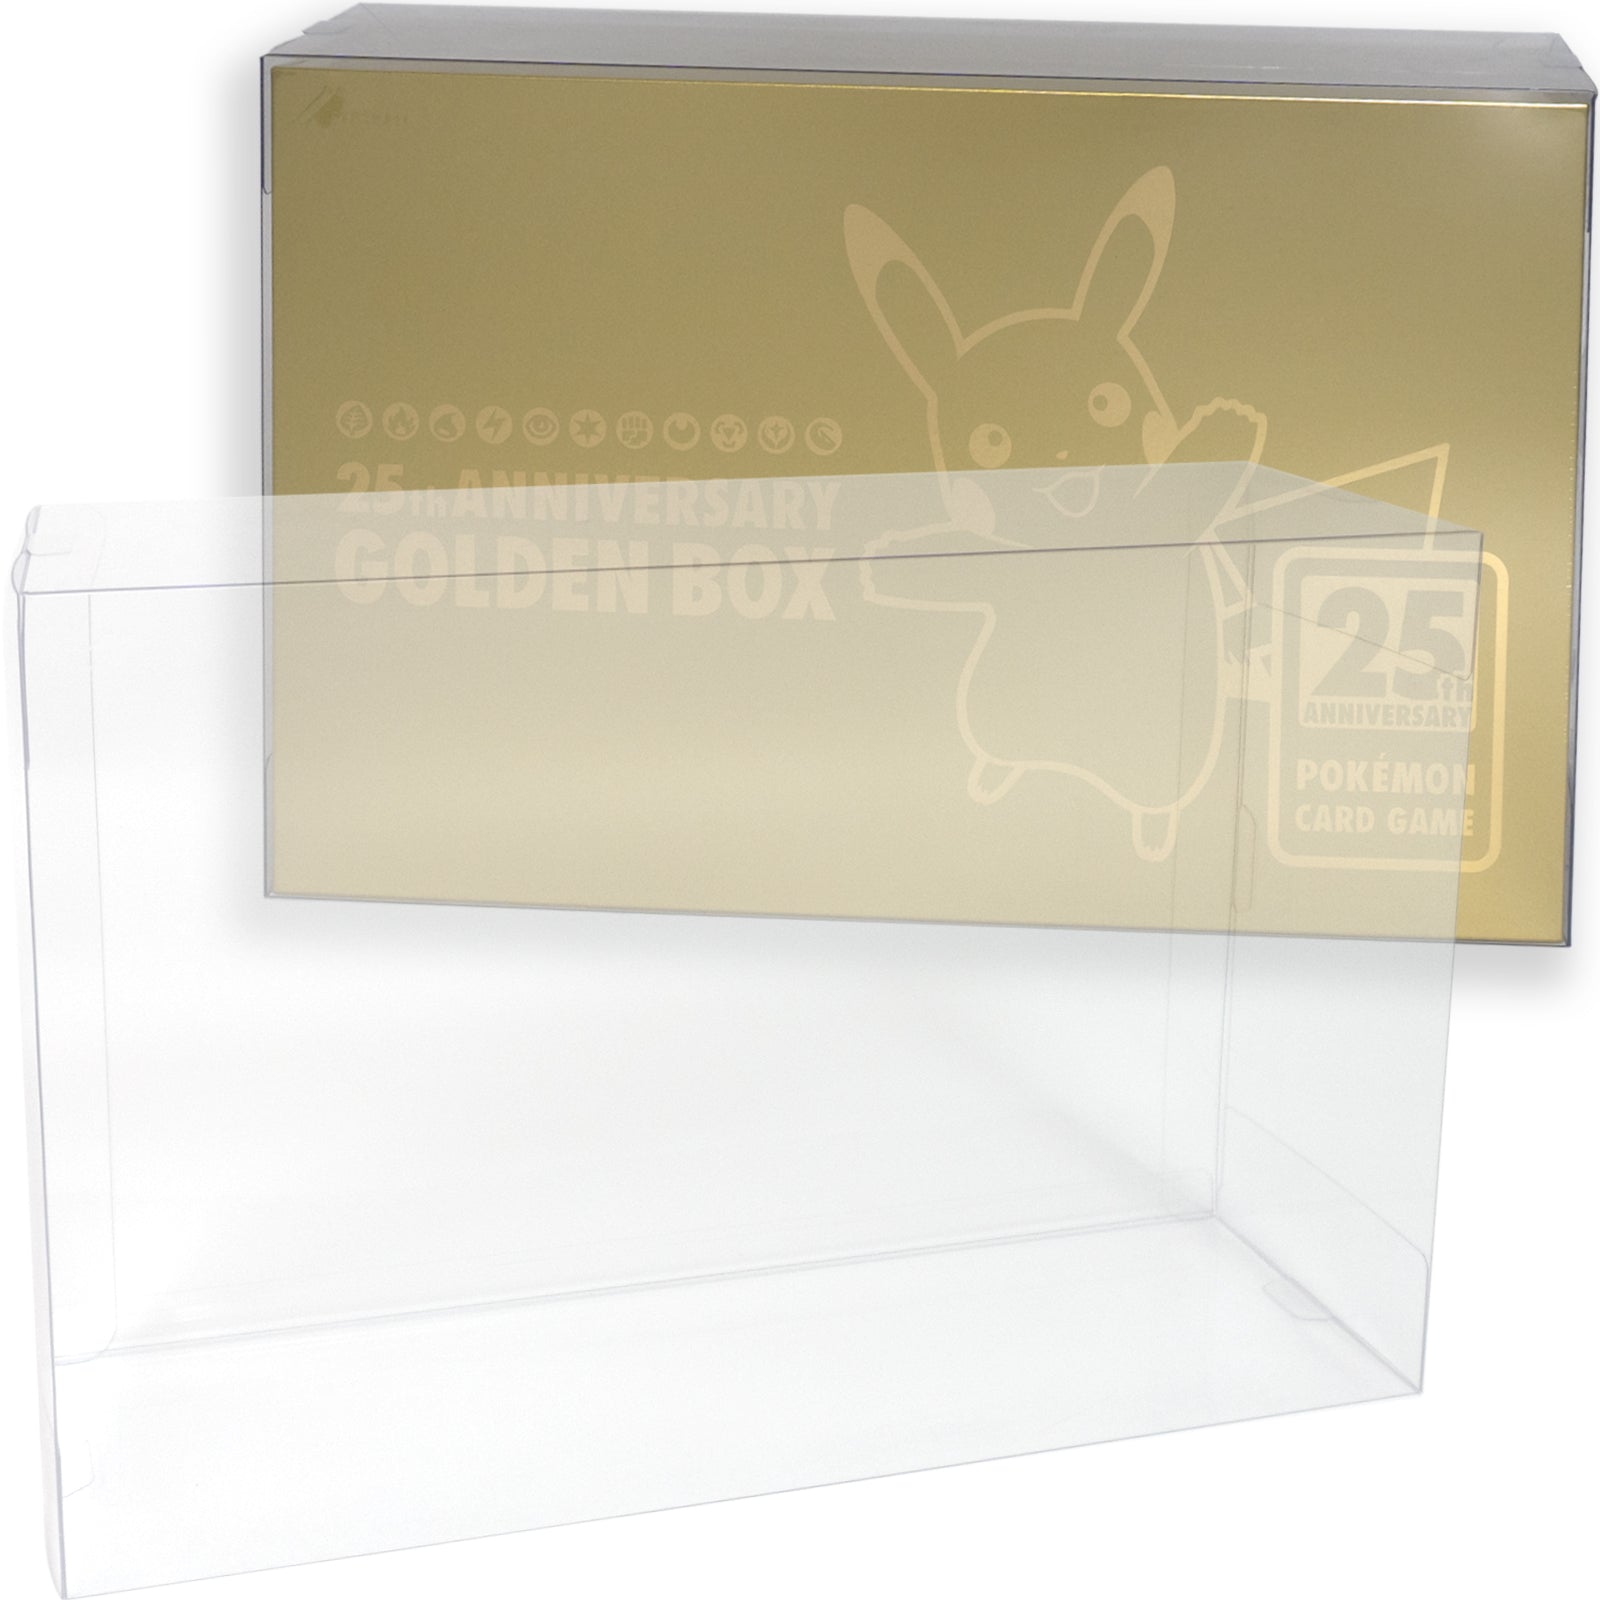 Boxx Guardian ポケモンカードBOX用 25th ANNIVERSARY GOLDEN